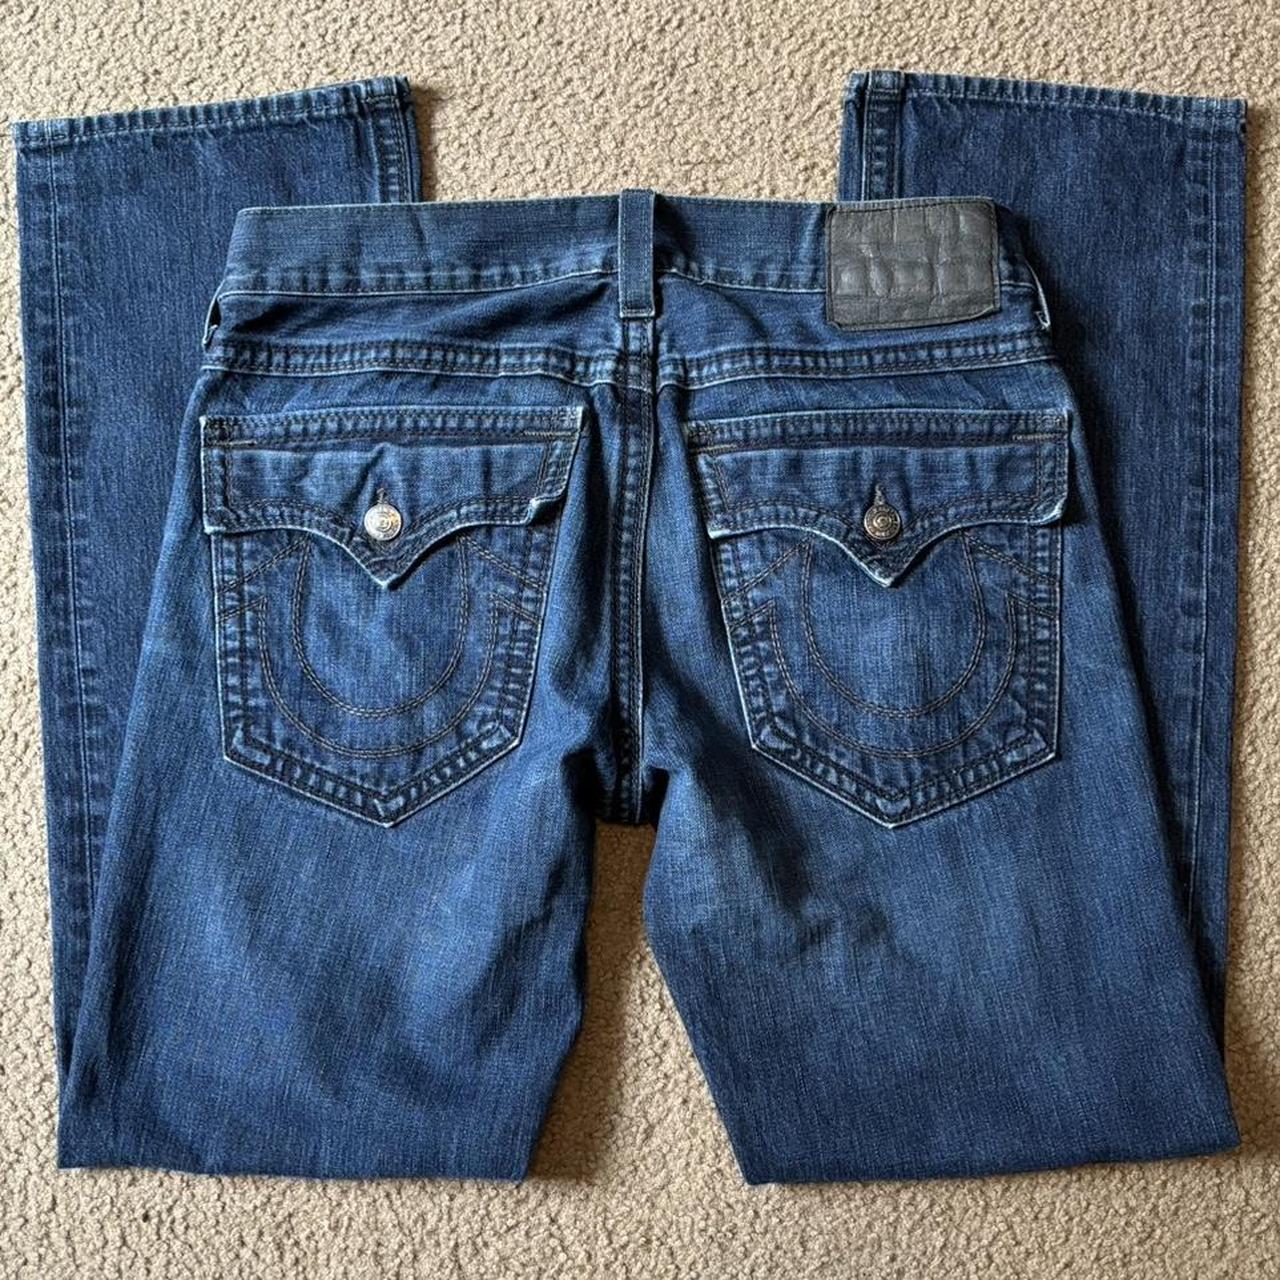 True Religion double stitch jeans Size 33x32 strait... - Depop